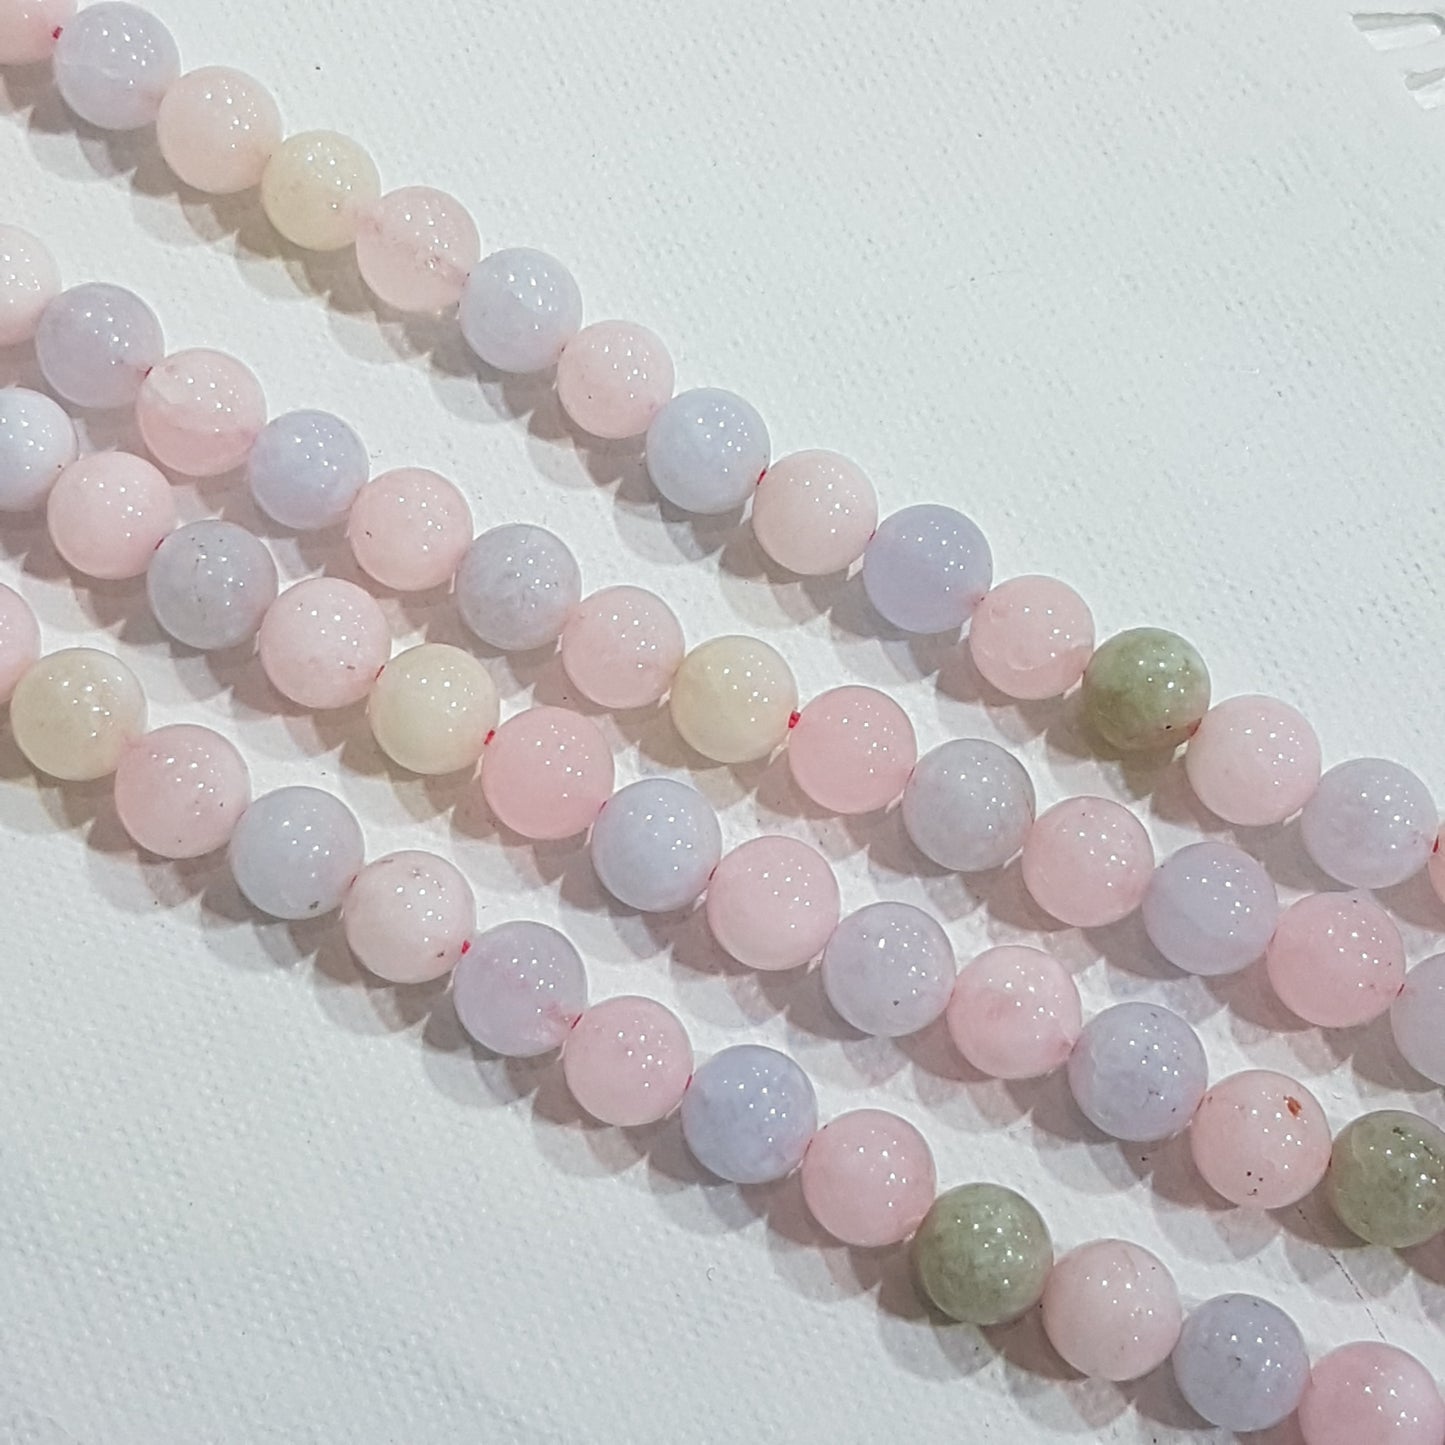 8mm Morganite Gemstone Beads